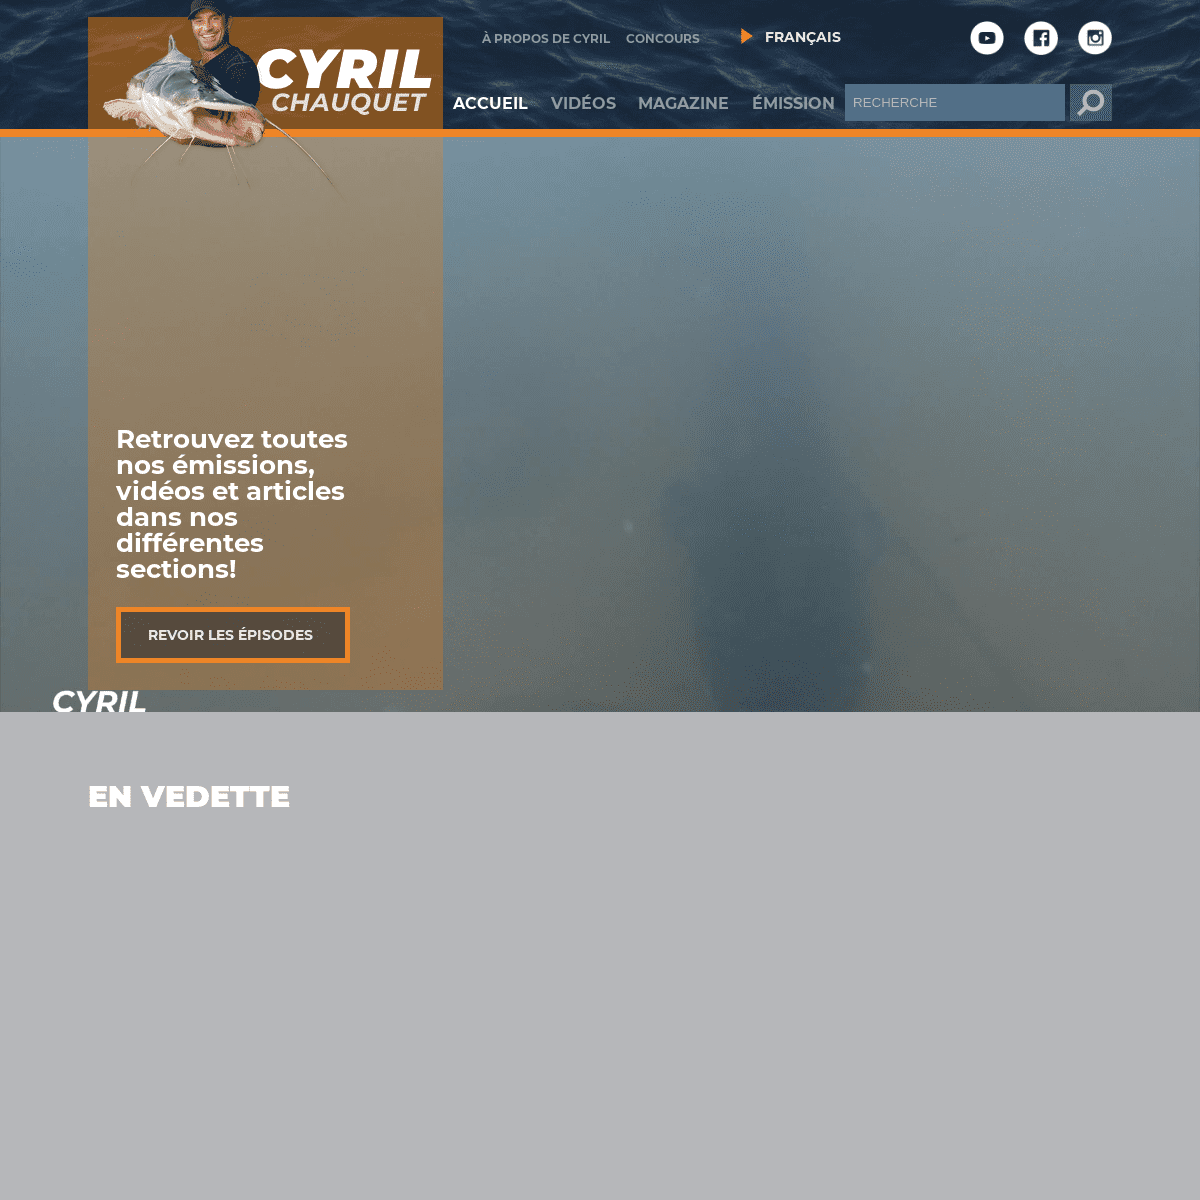 A complete backup of cyrilchauquet.com